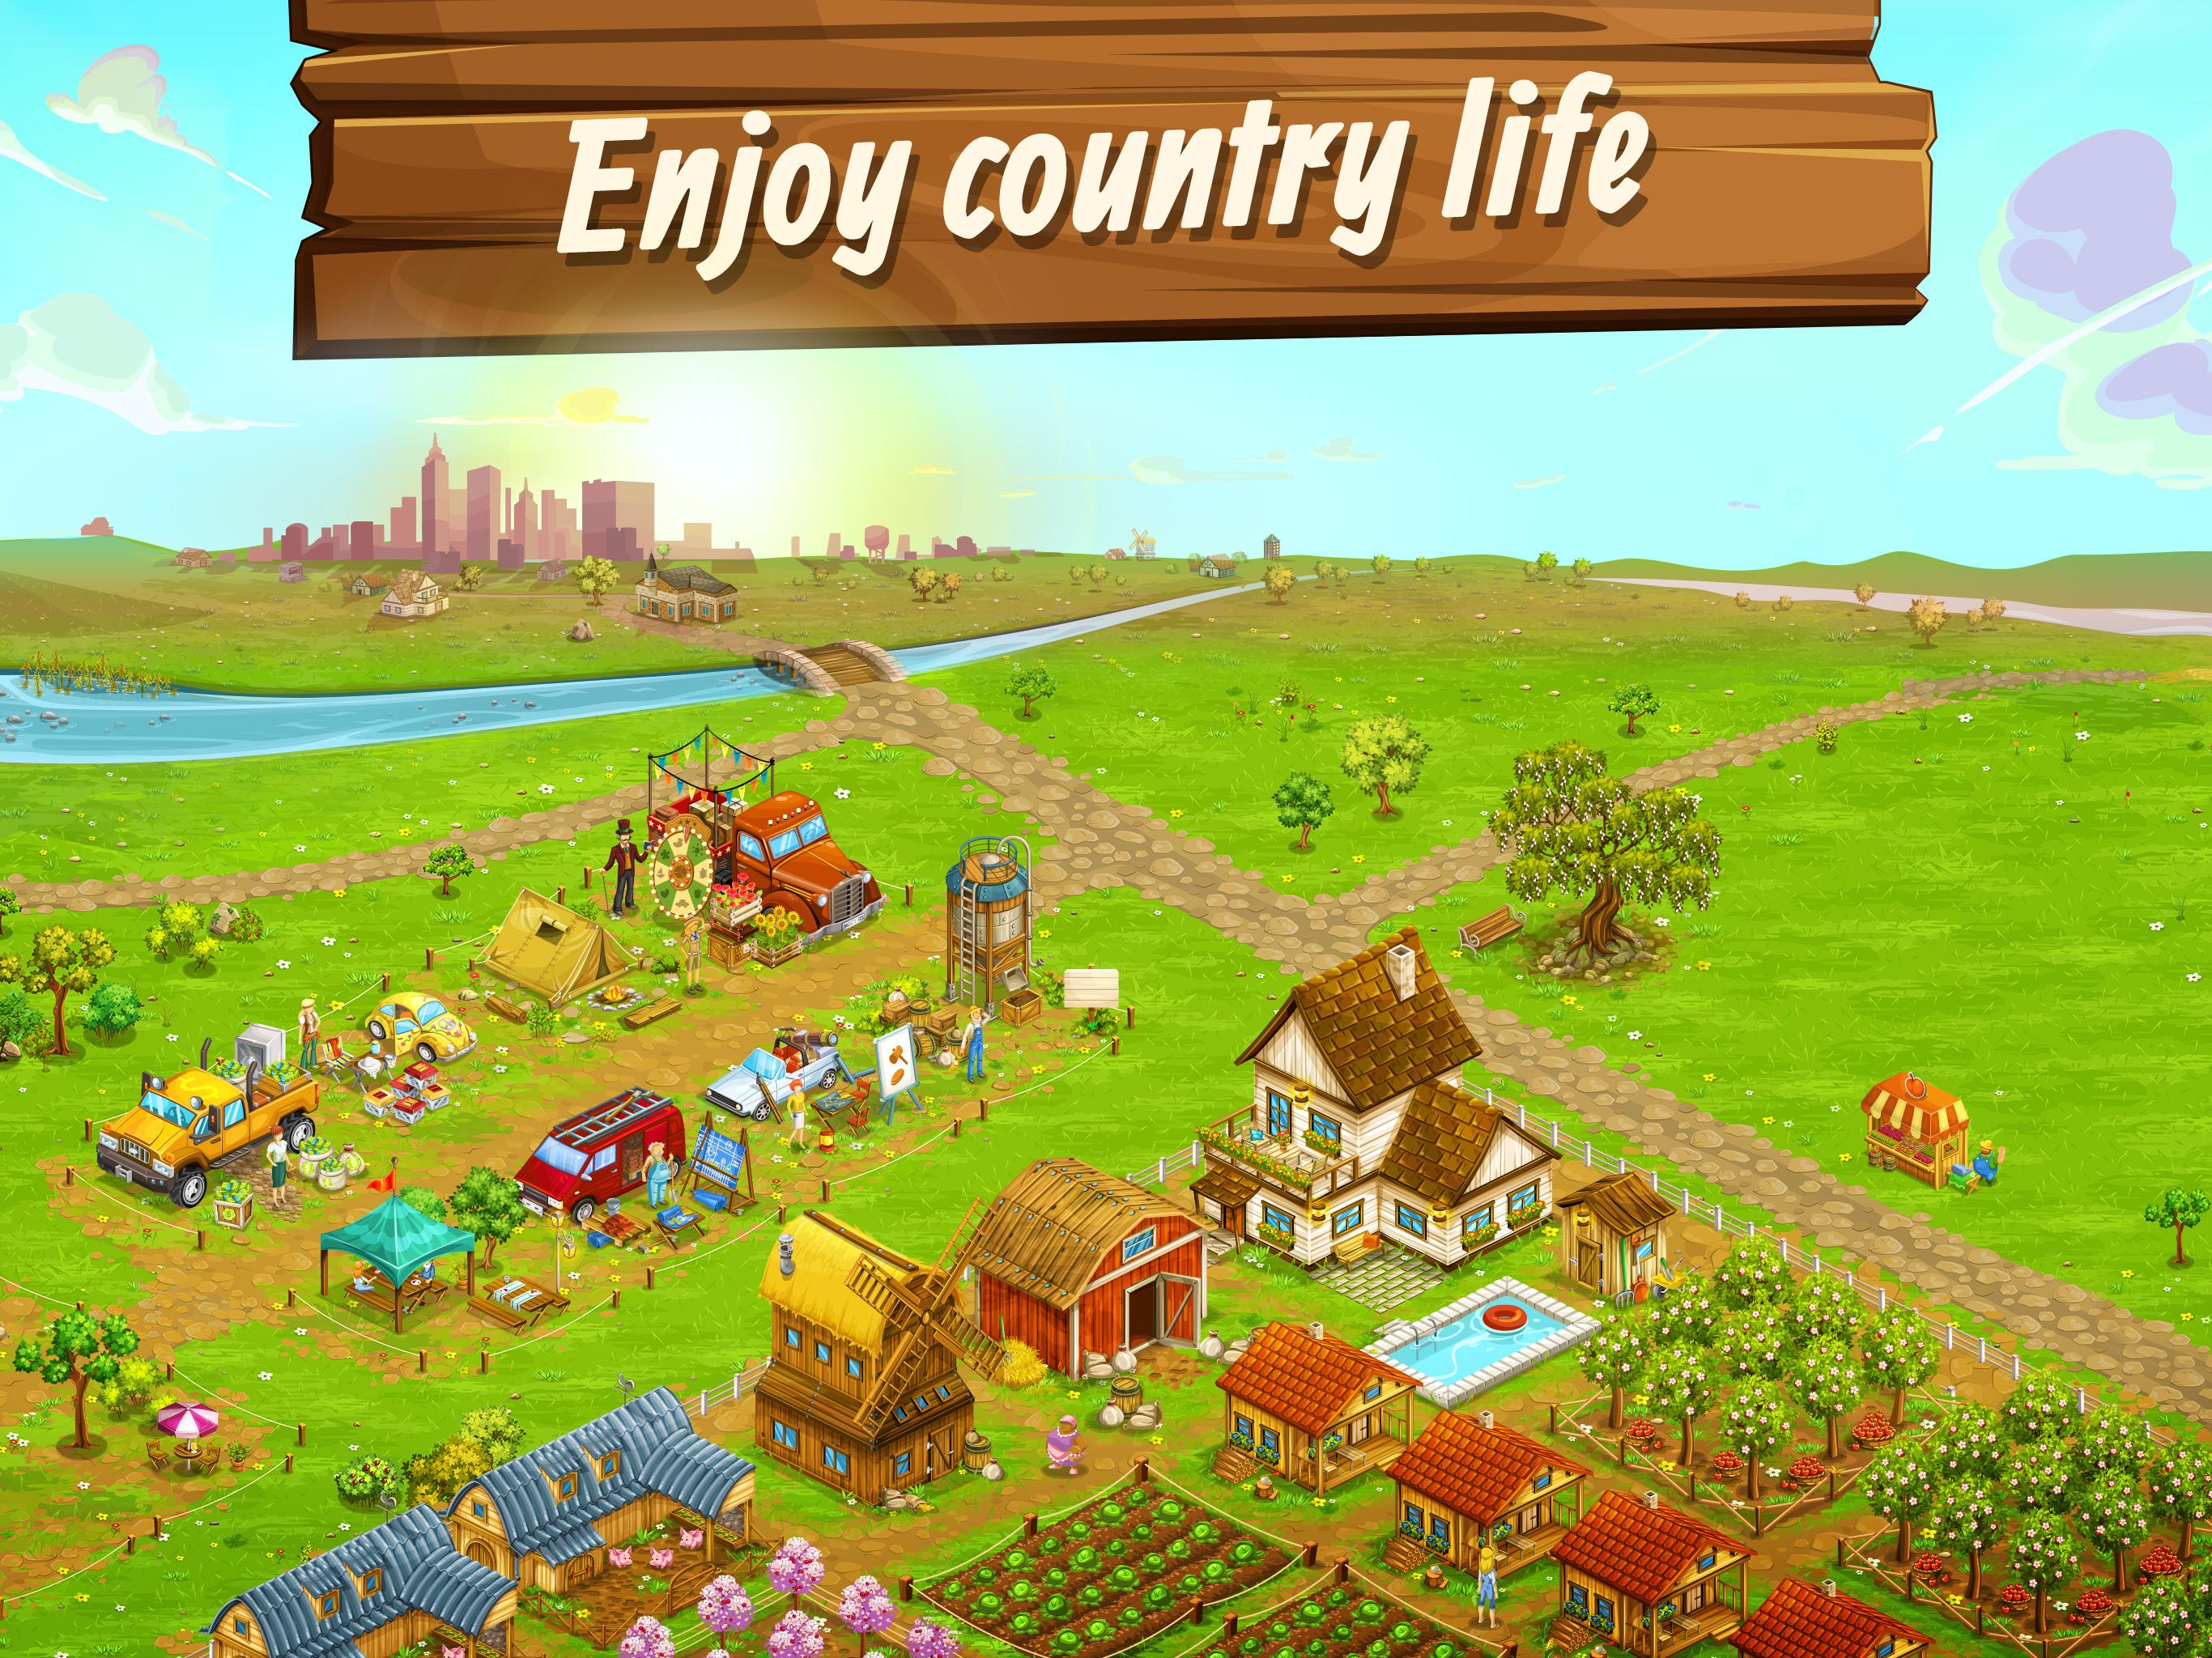 big farm: mobile harvest forum